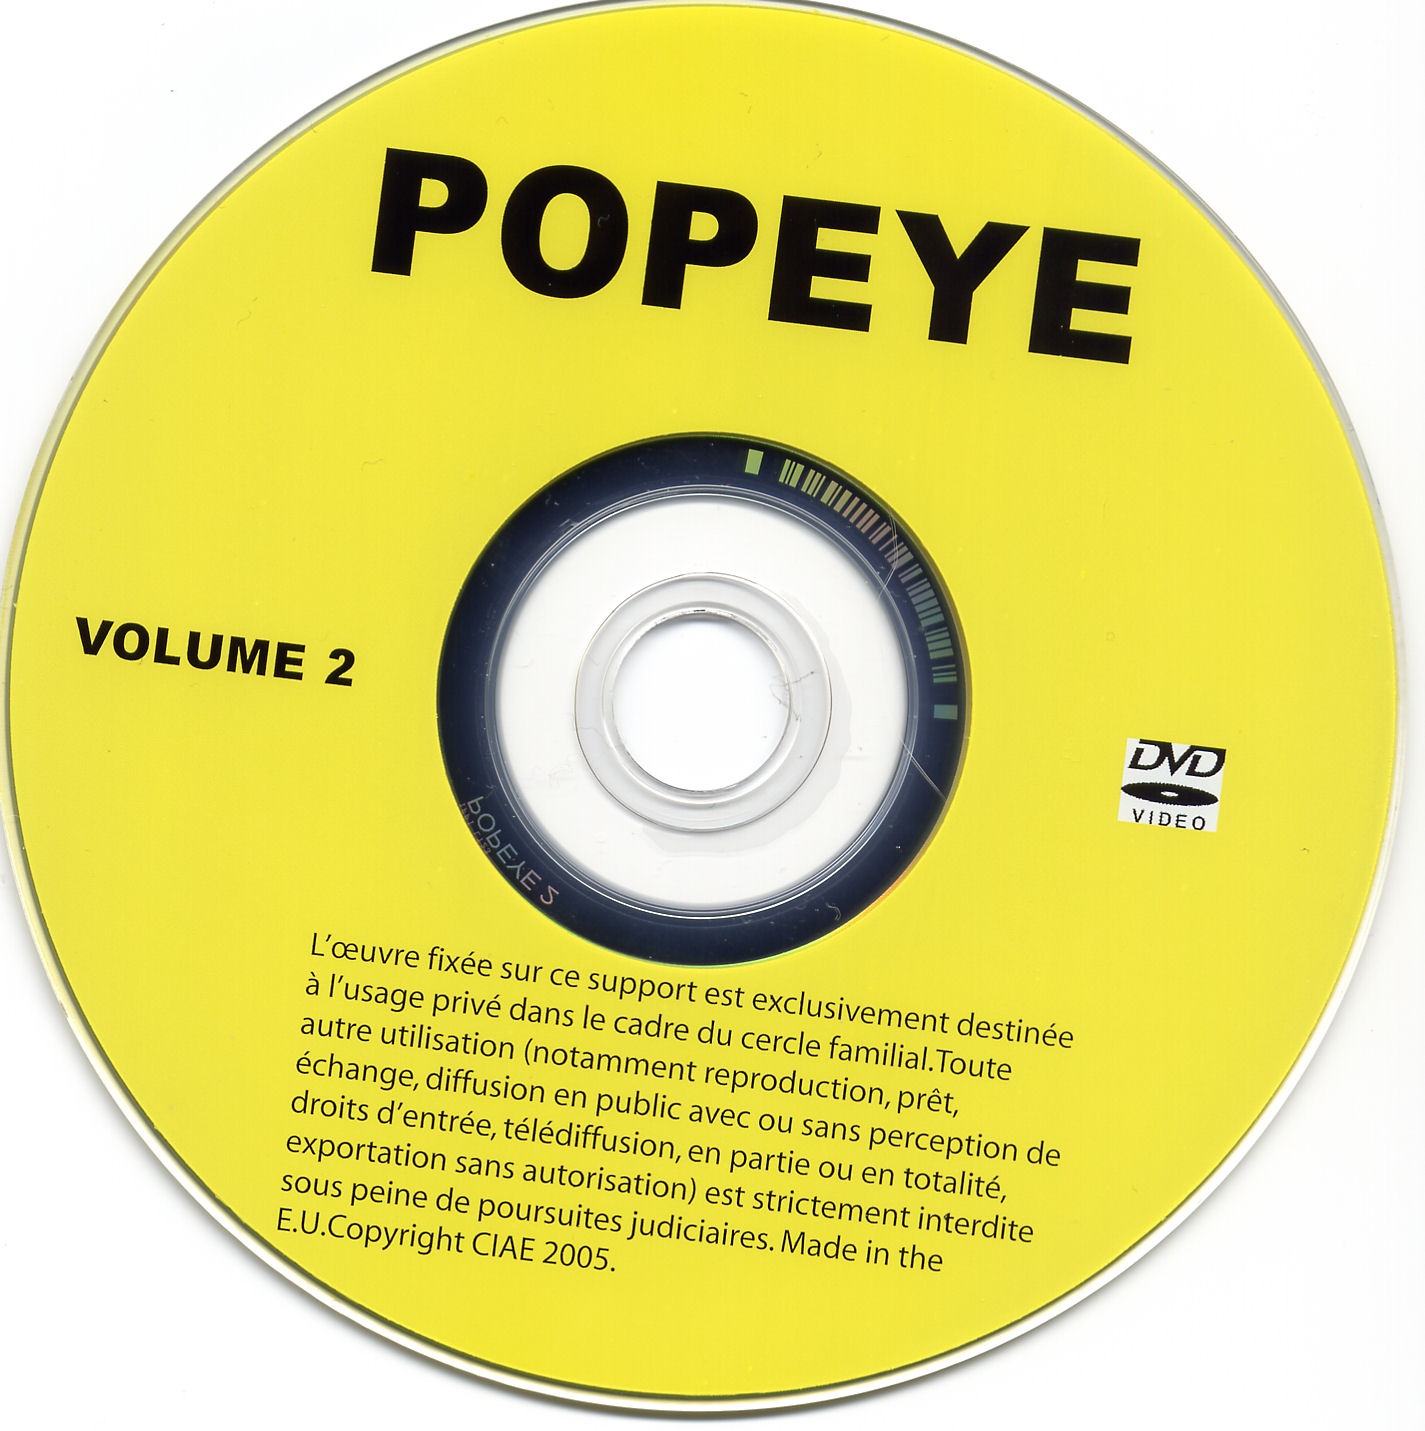 Popeye vol 2